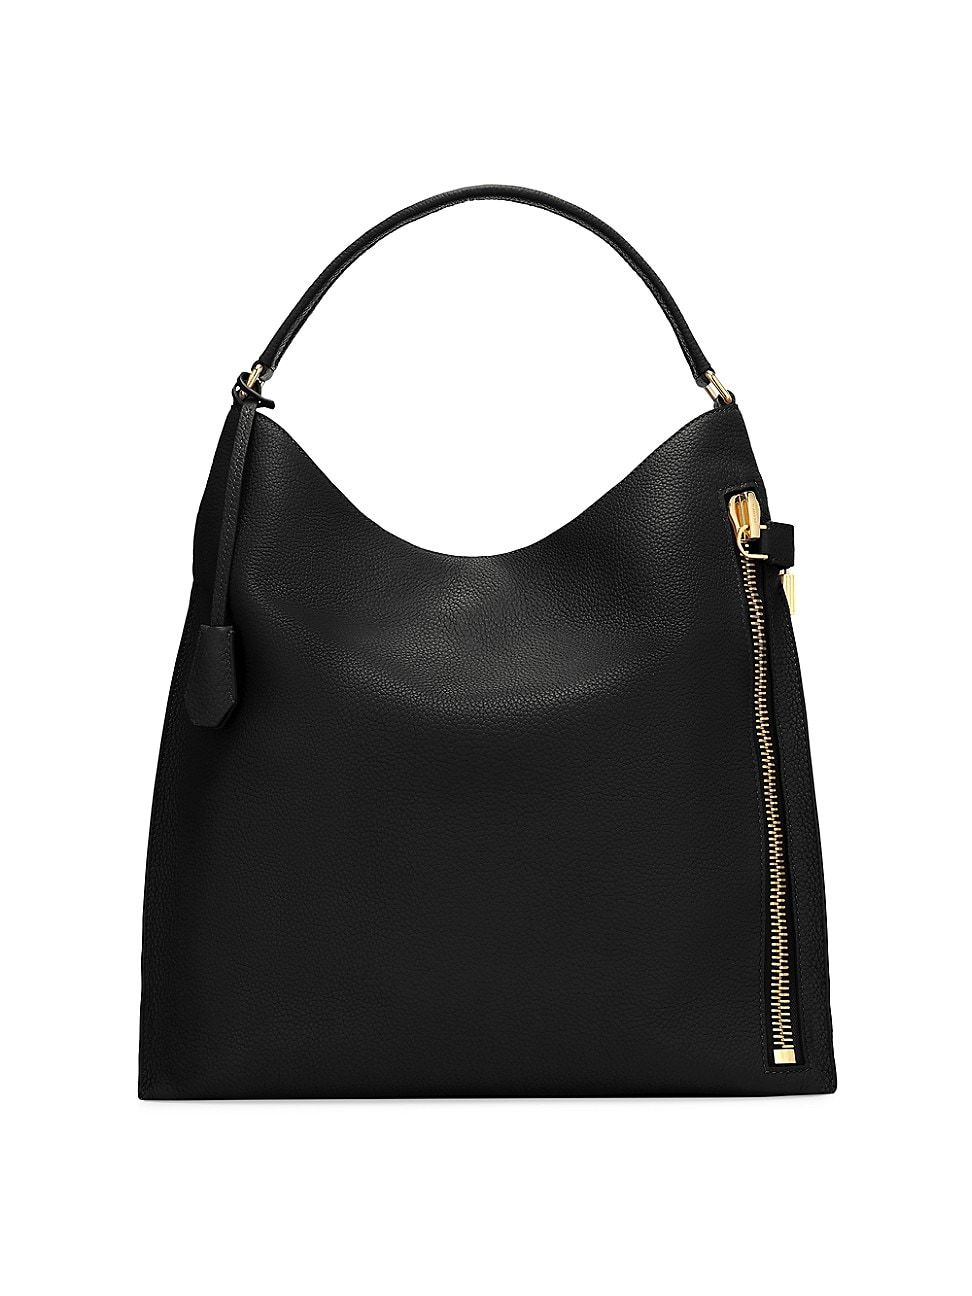 Women's Small Alix Leather Hobo Bag - Black - Black - Size Small | Saks Fifth Avenue